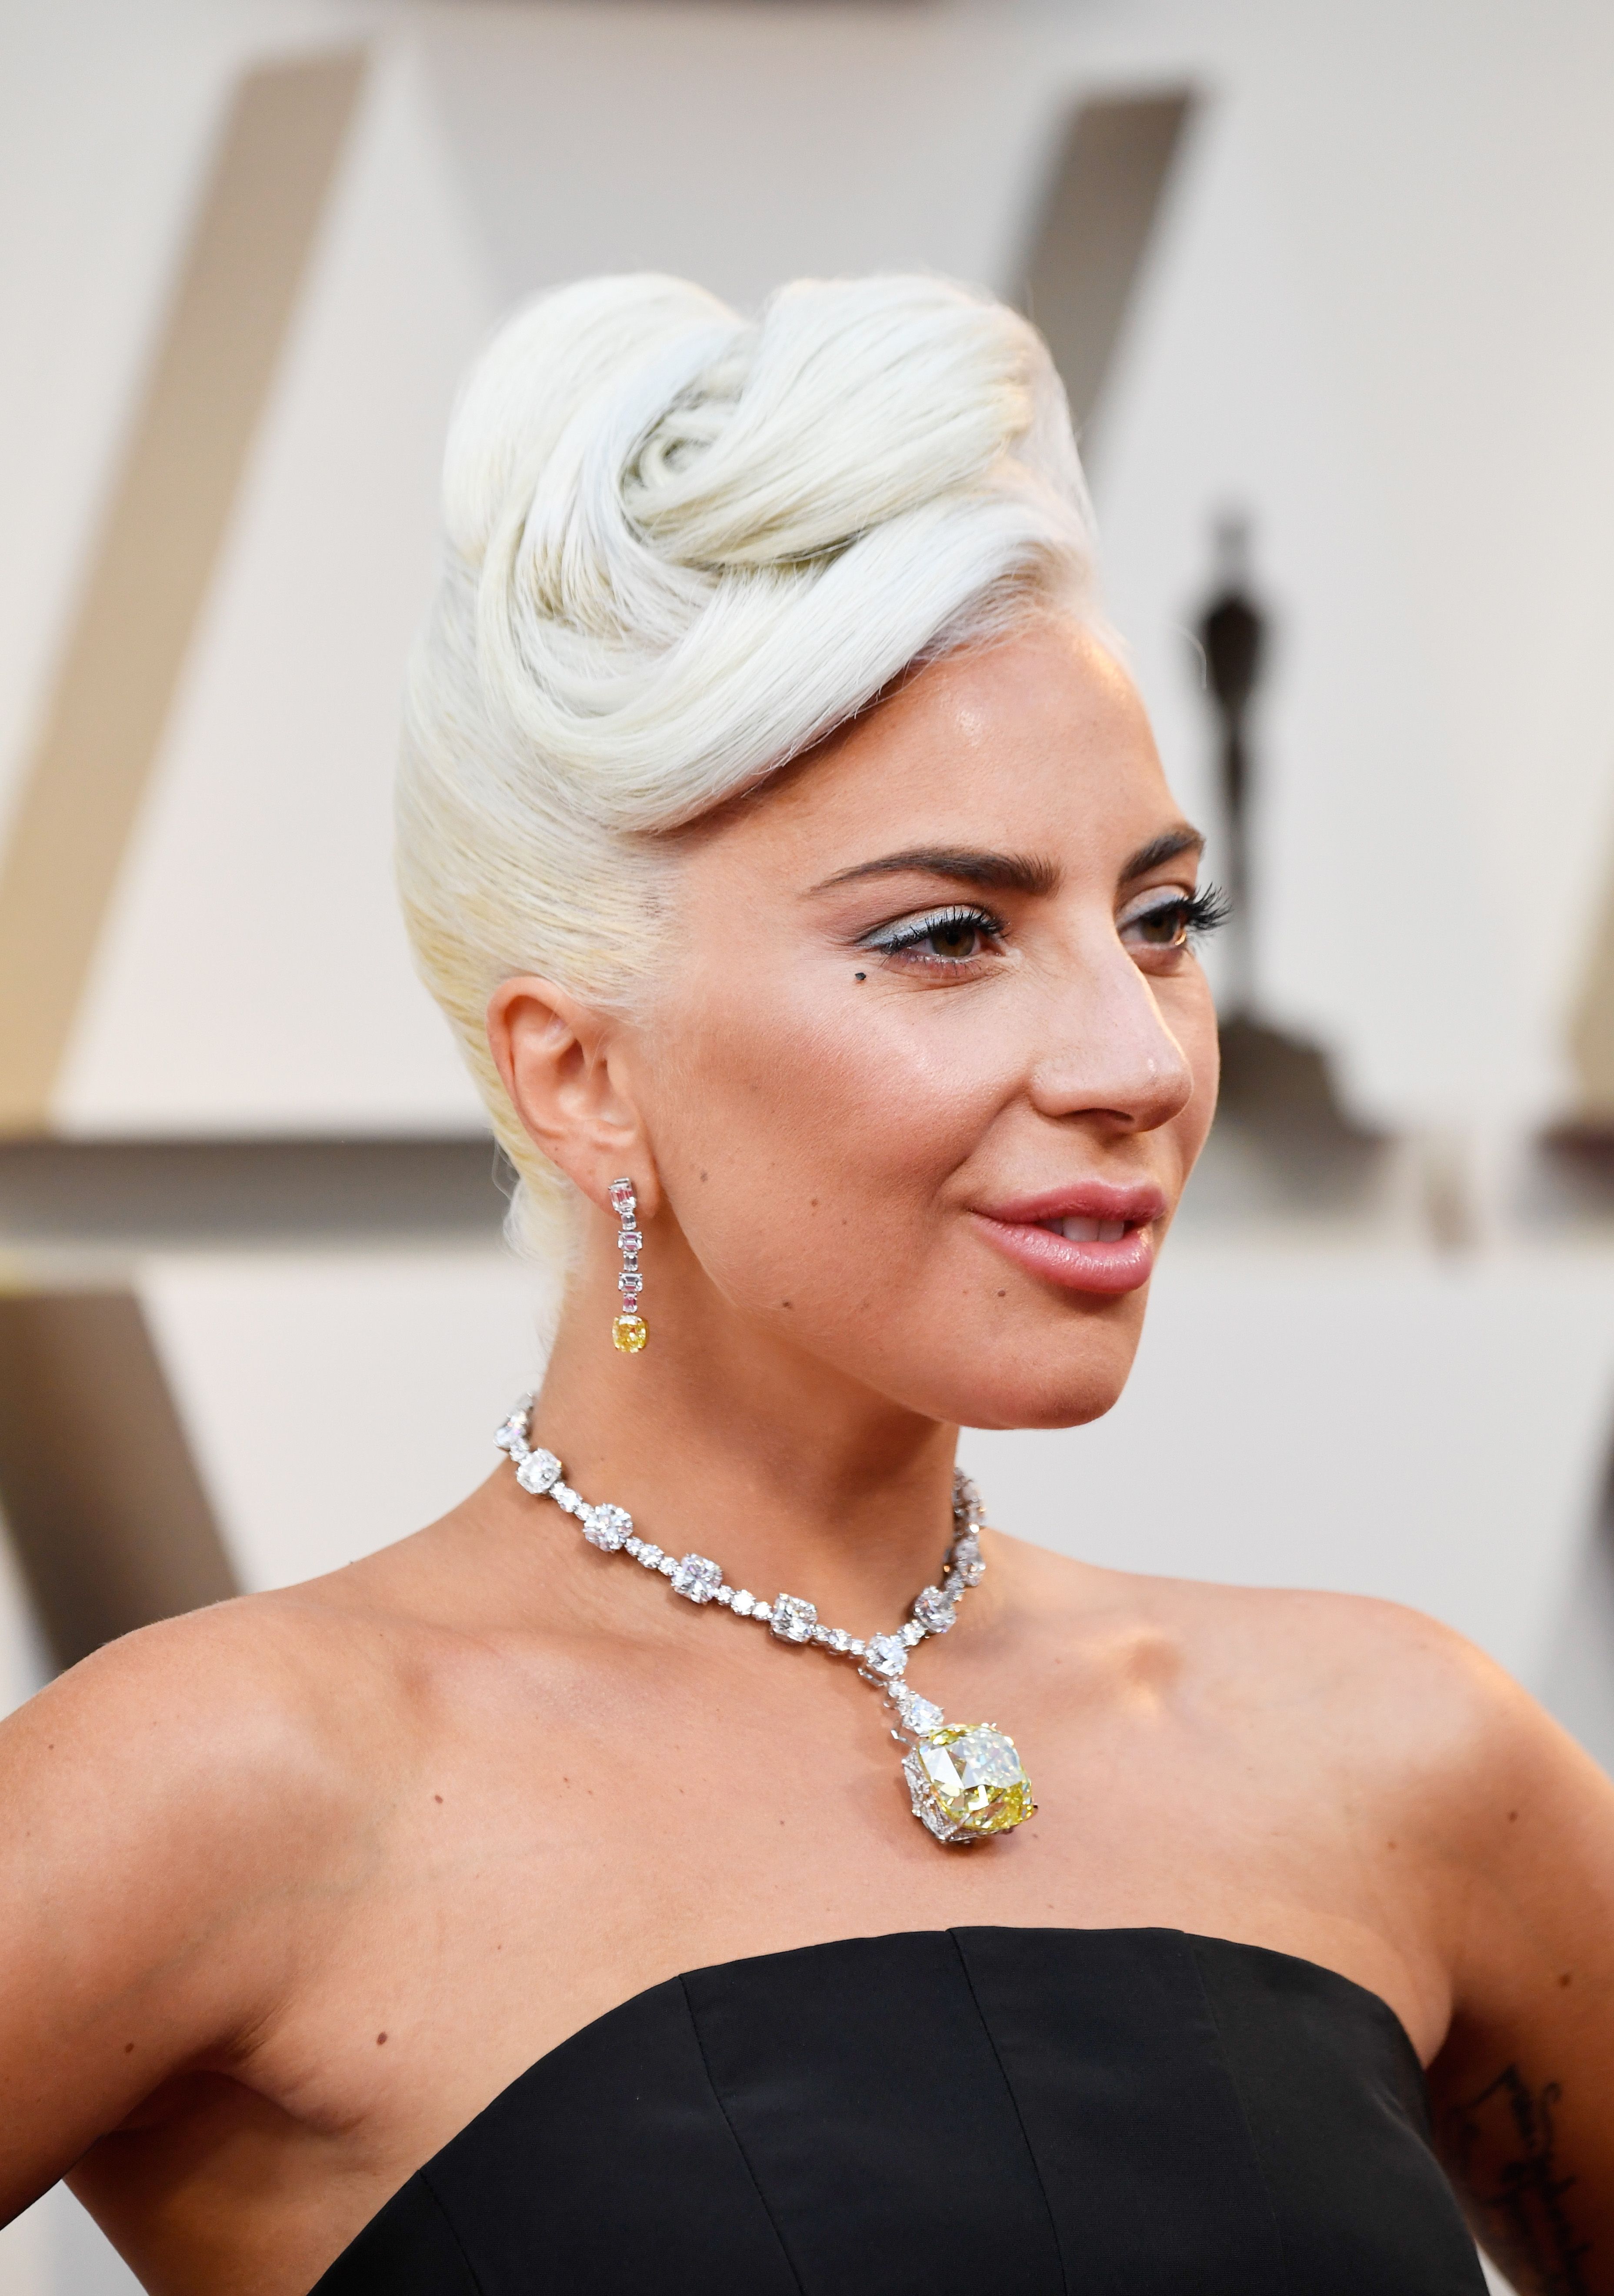 How to Get Lady Gaga's Hair Bow Tutorial | HISSYFIT - YouTube